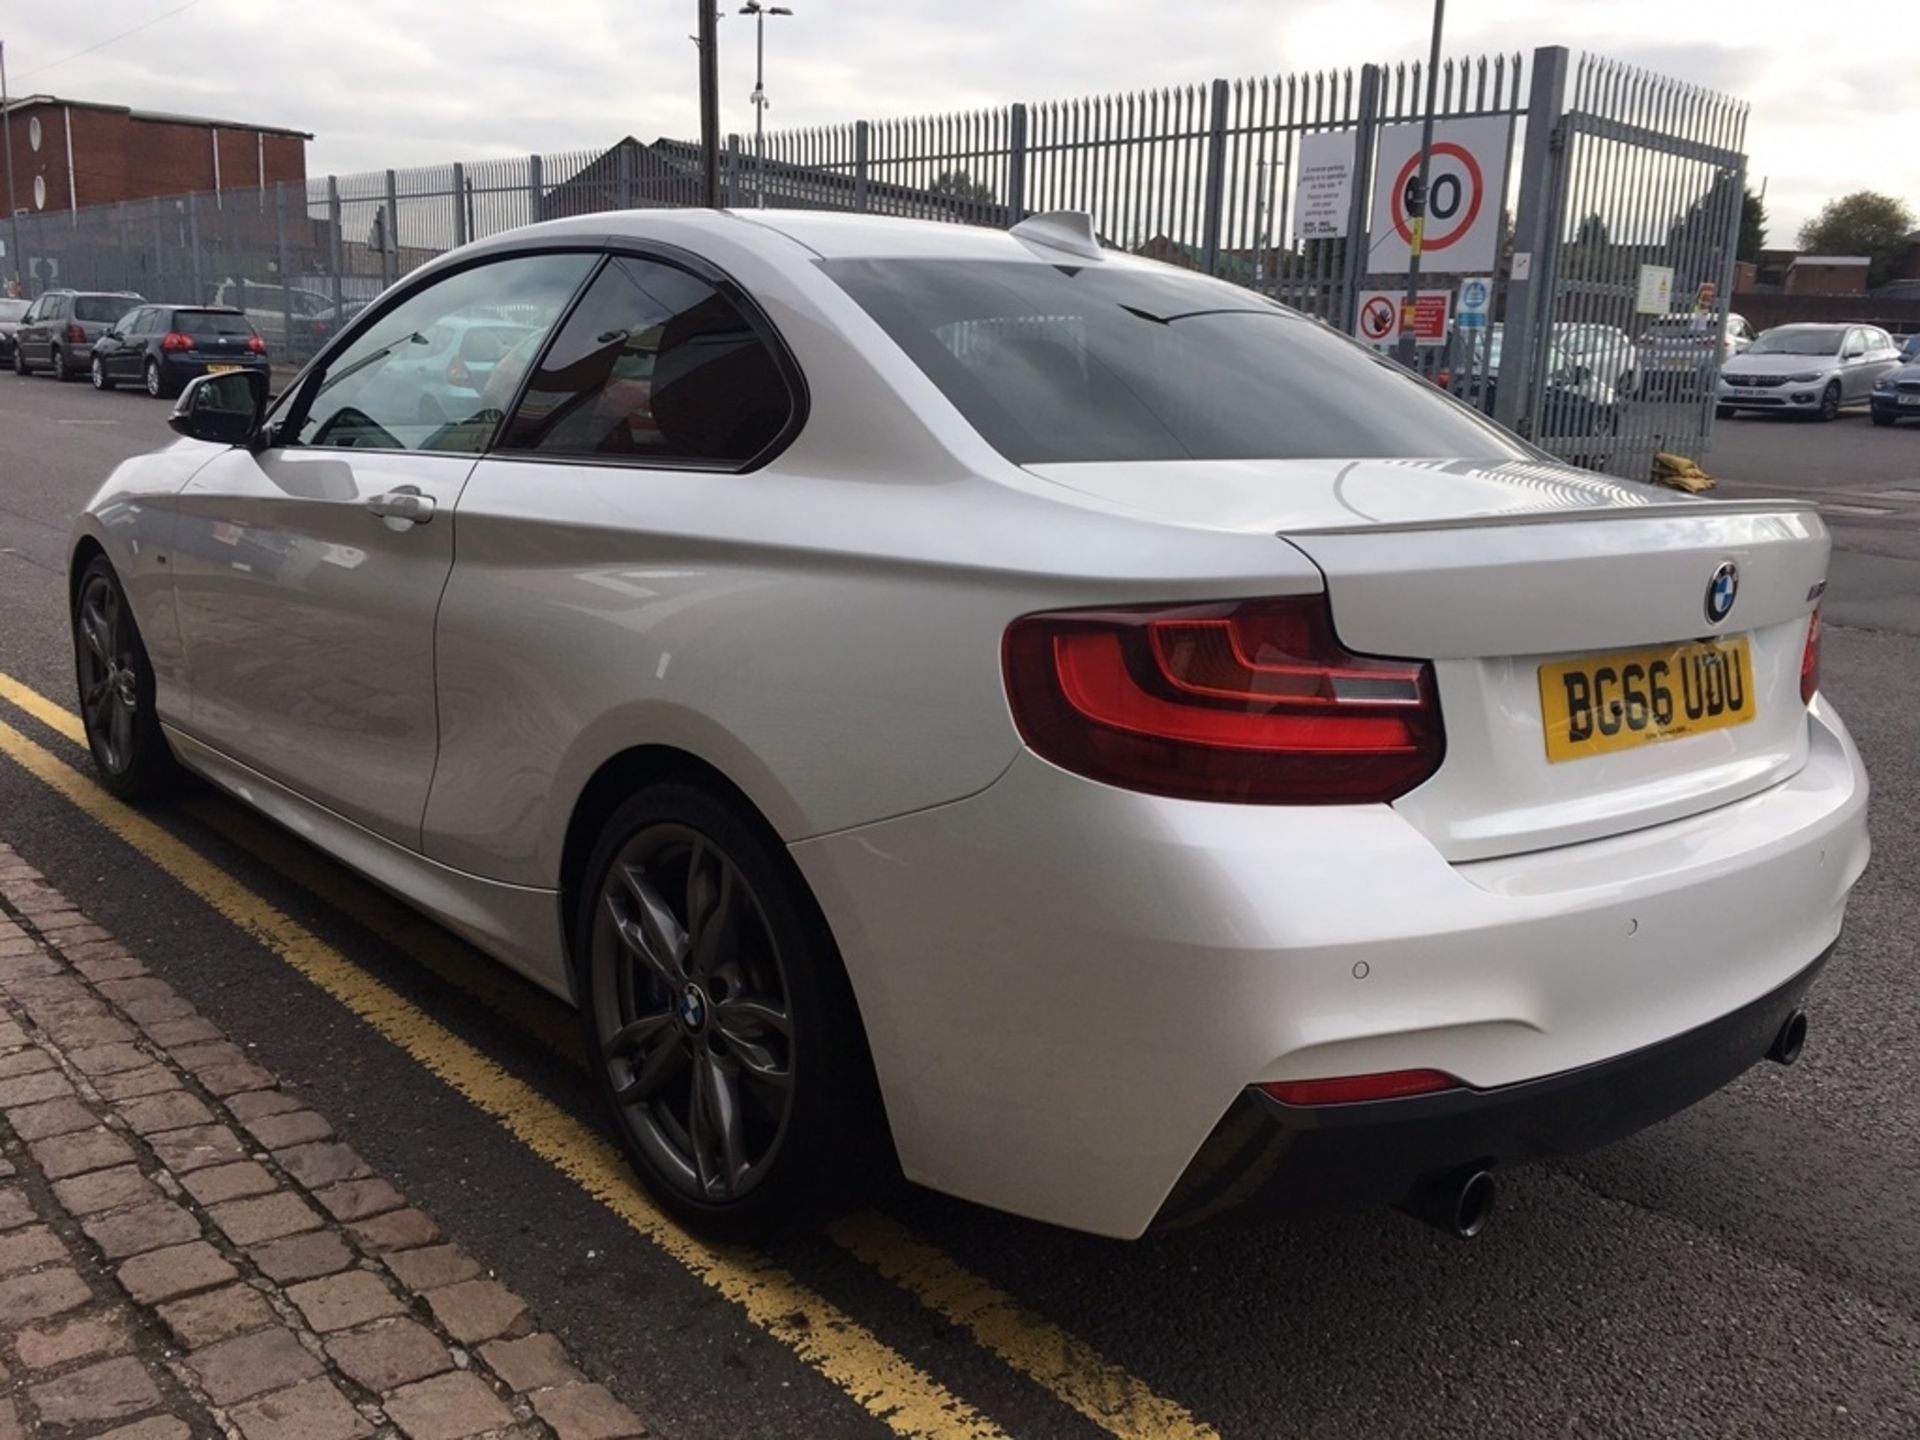 BMW 2 Series 3.0 M235i Sport Auto – 2 Dr- Petrol – 2016 – White Reg: BG66 UDU – 2016Mileage: 32, - Image 3 of 6